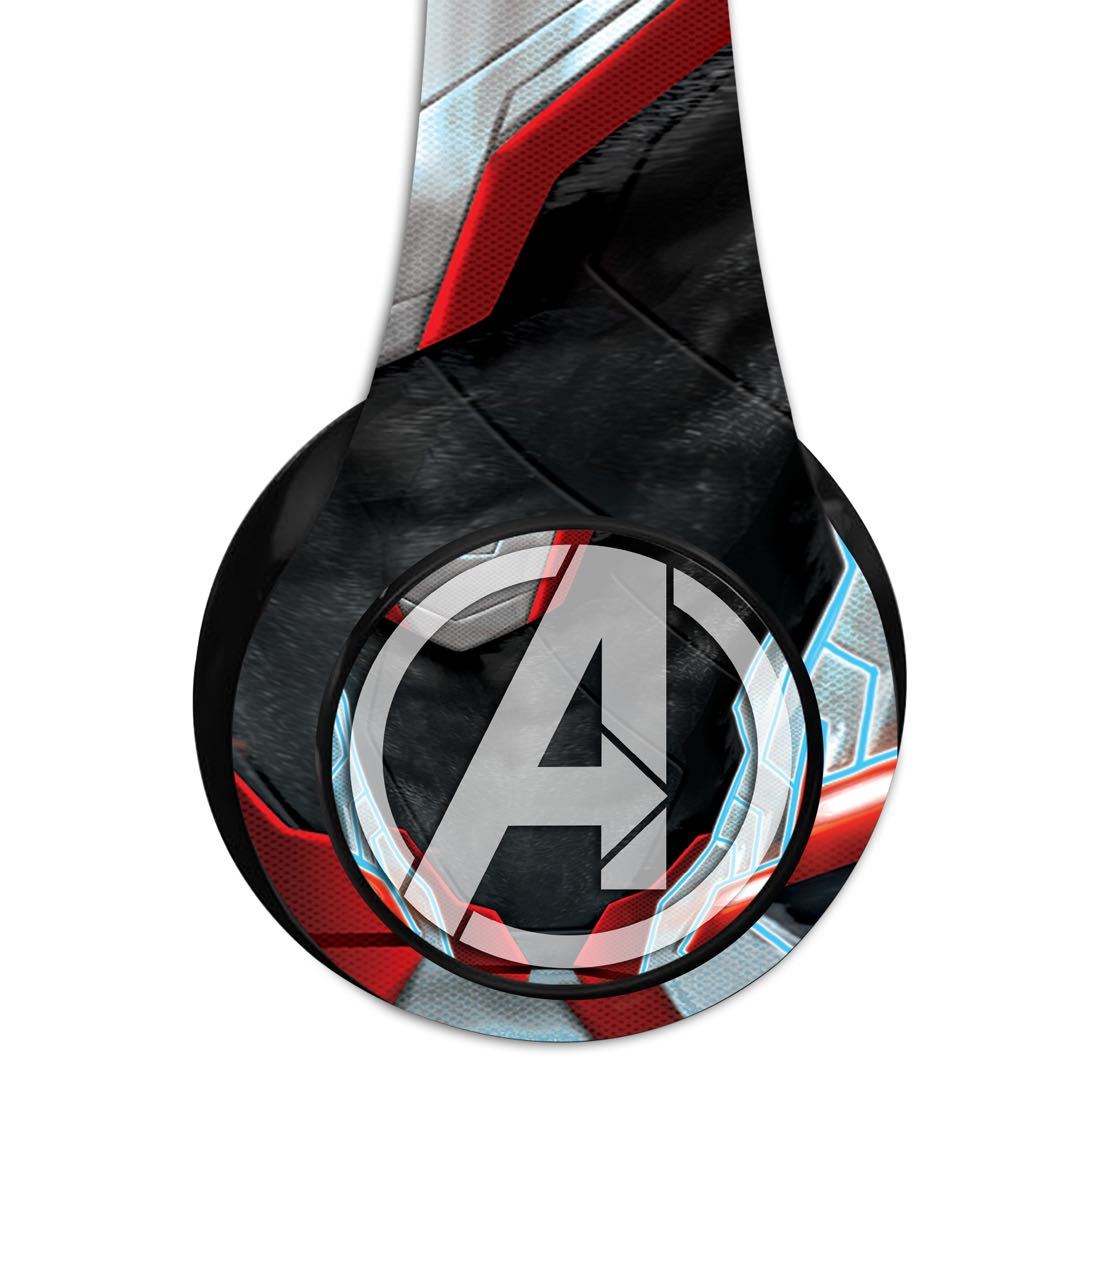 Endgame Suit Avengers - Decibel Wireless On Ear Headphones